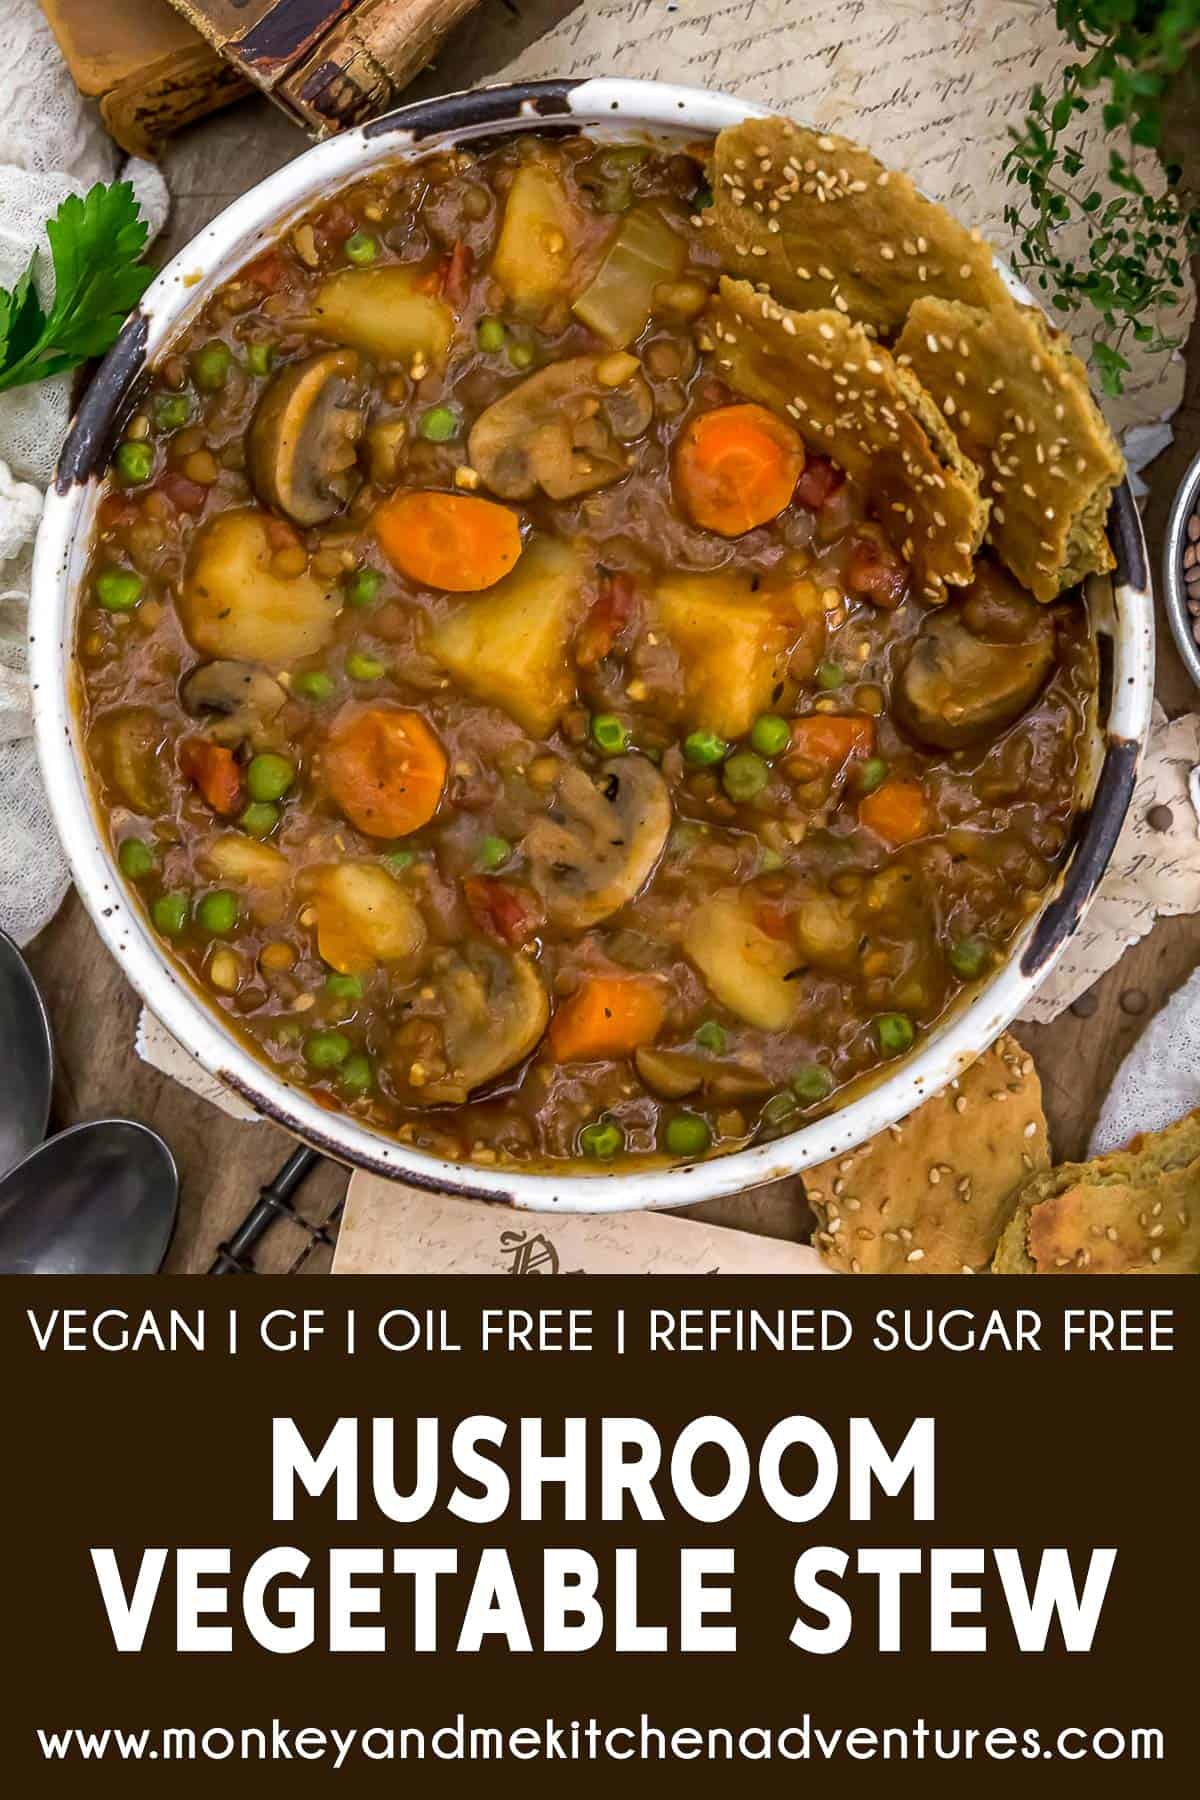 Mushroom Vegetable Stew with Text Description